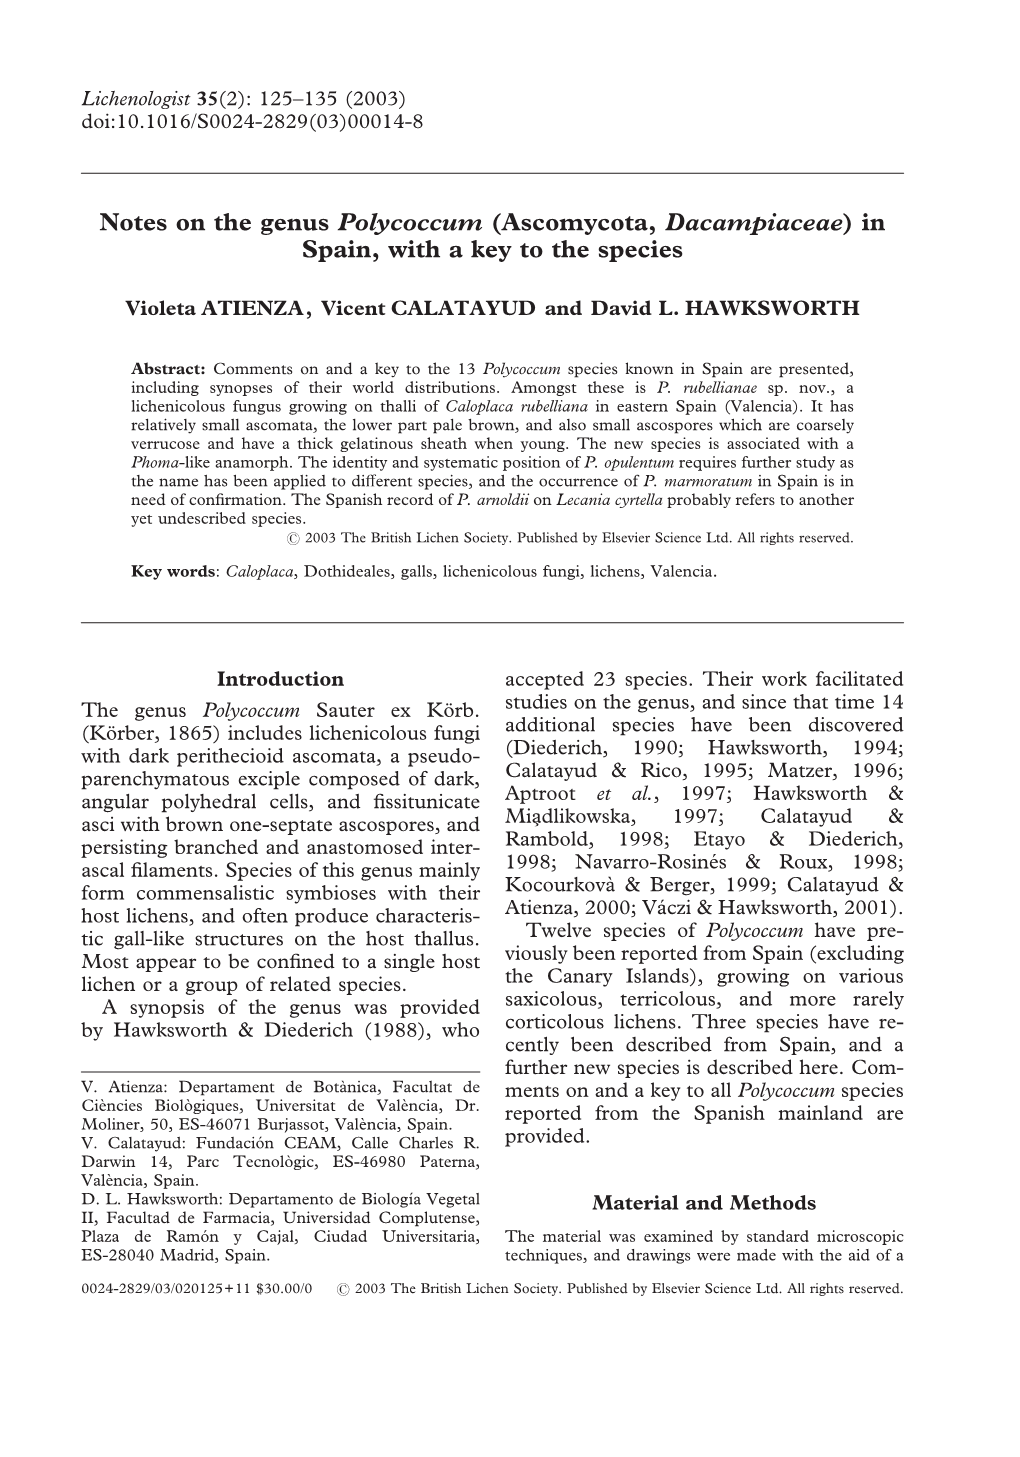 Notes on the Genus Polycoccum (Ascomycota, Dacampiaceae) In